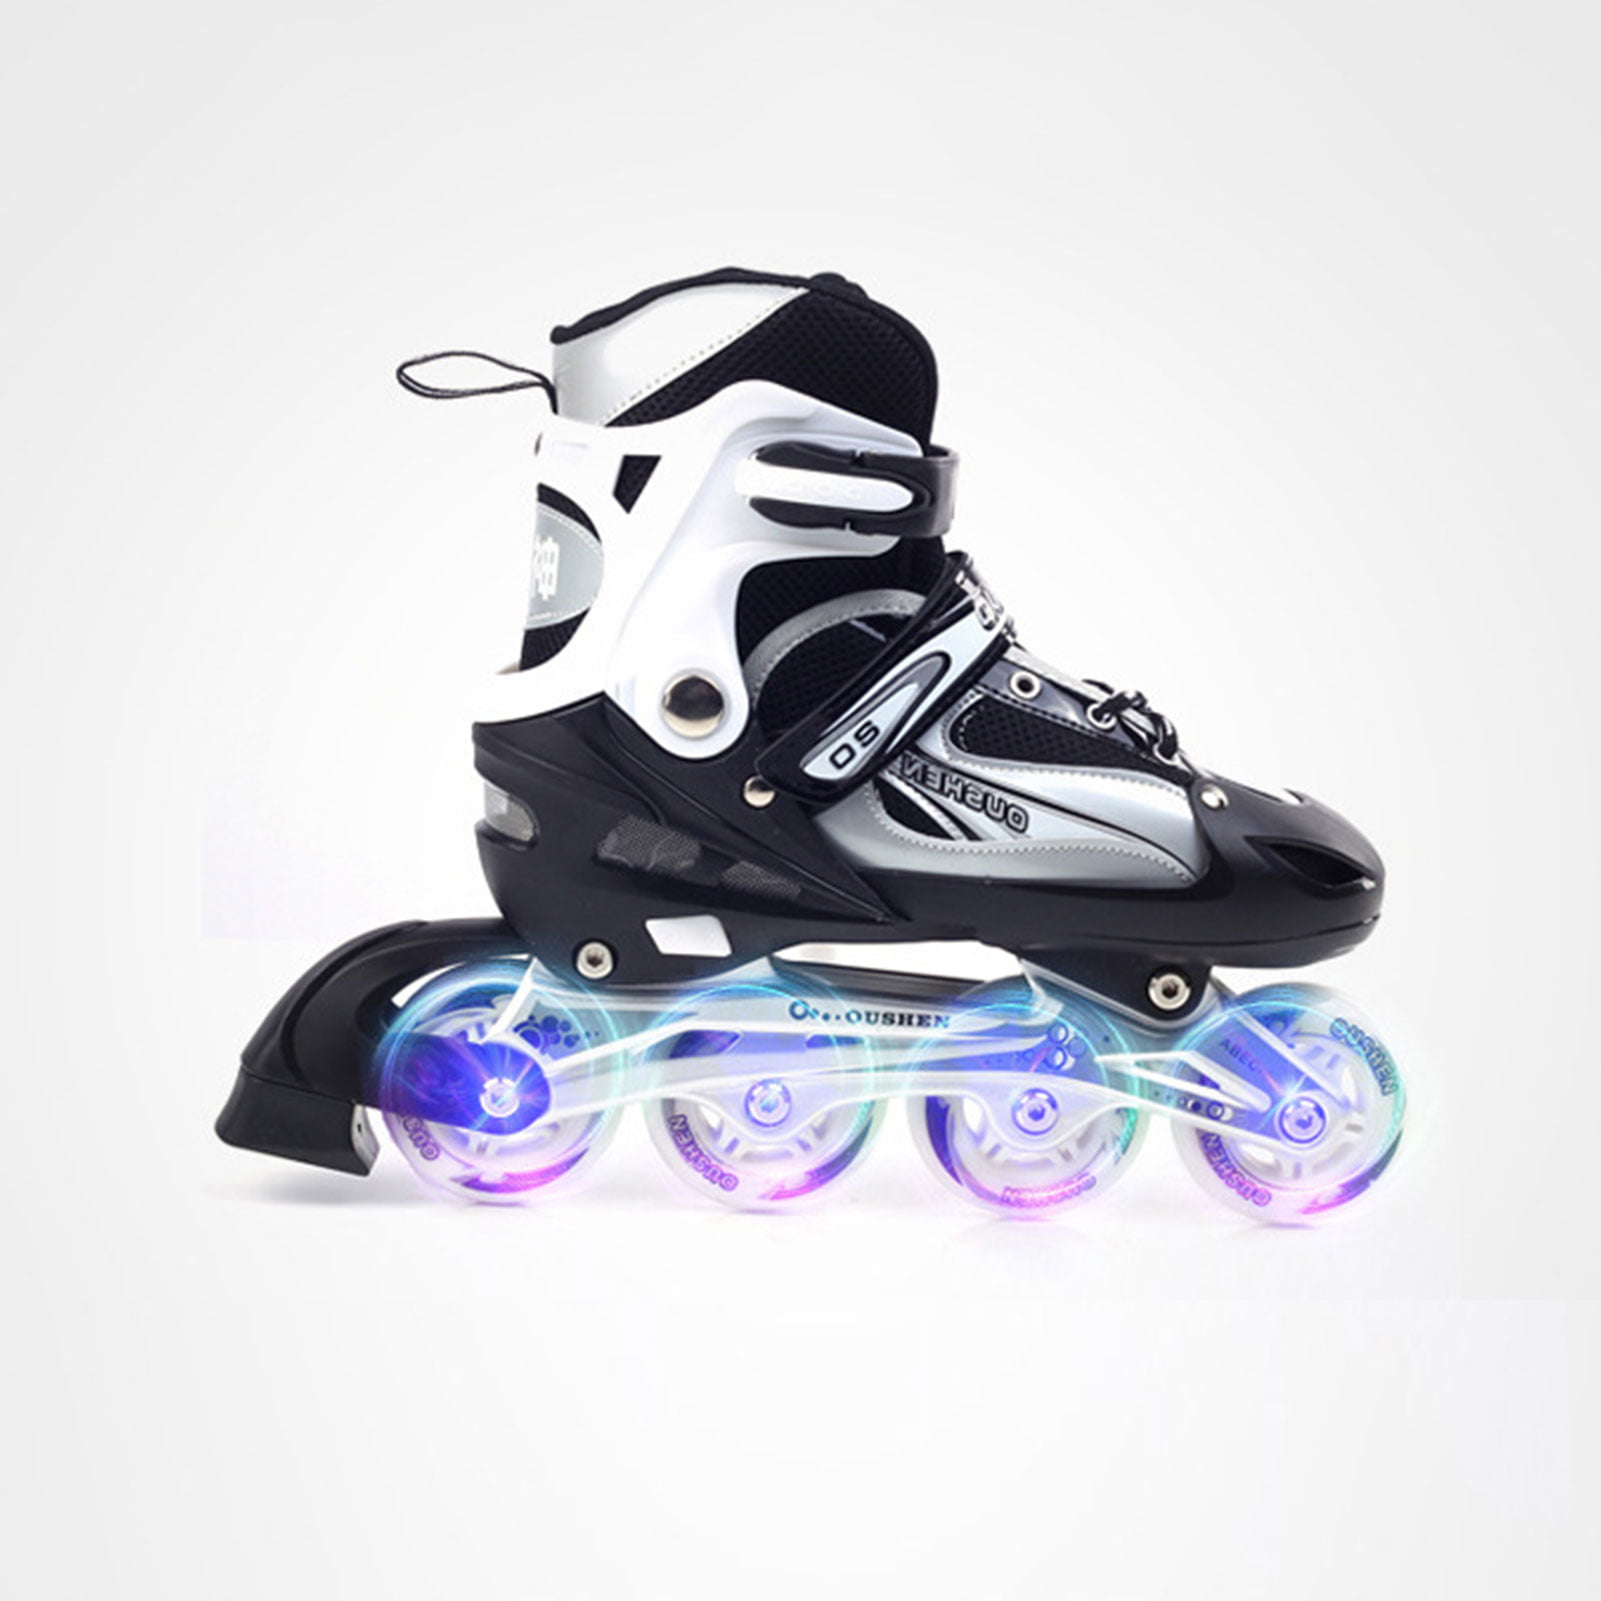 Details about   New 4 Wheels Roller Skates Adjustable Breathable for Kids Girls Boys Women Gift 